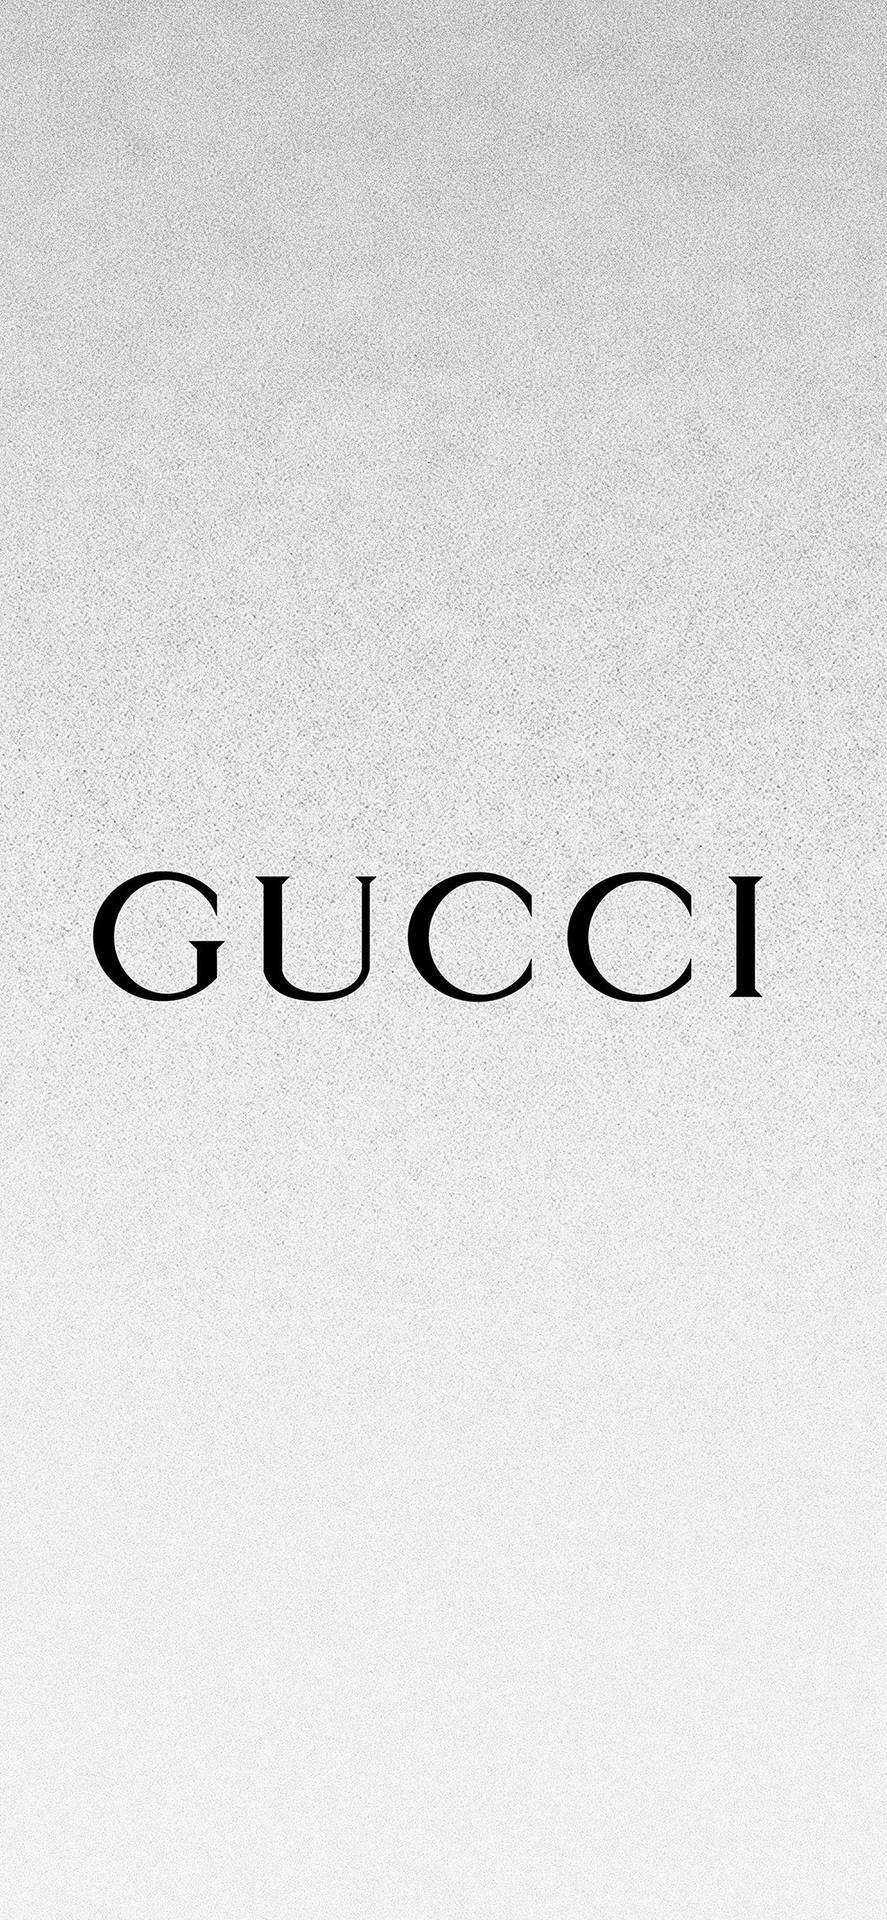 Gucci 1125X2436 wallpaper